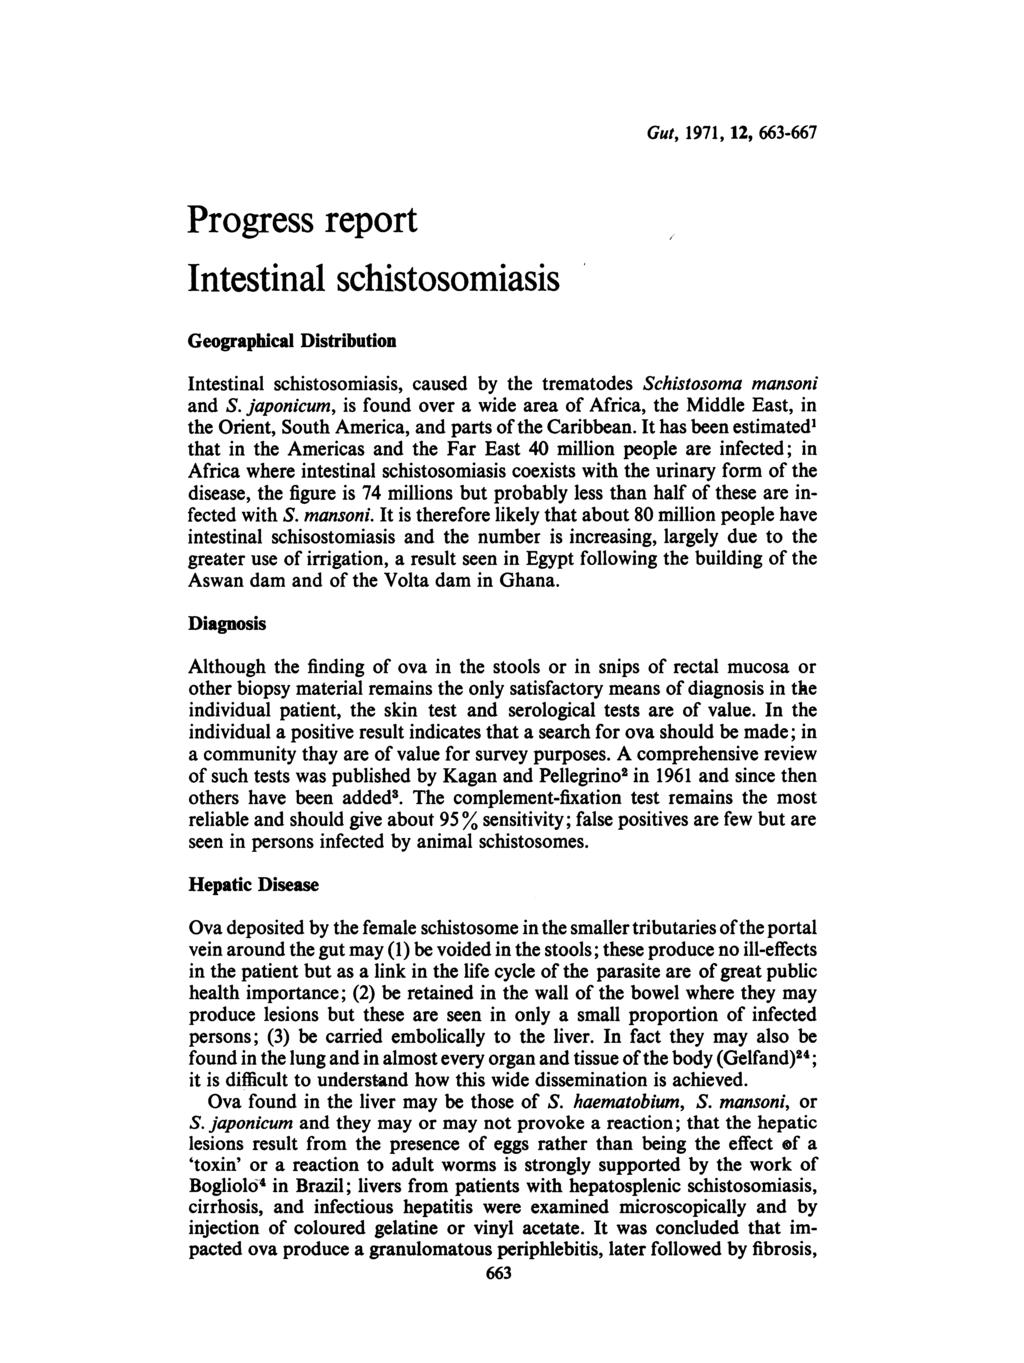 Progress report Intestinal schistosomiasis Geographical Distribution Gut, 1971, 12, 663-667 Intestinal schistosomiasis, caused by the trematodes Schistosoma mansoni and S.